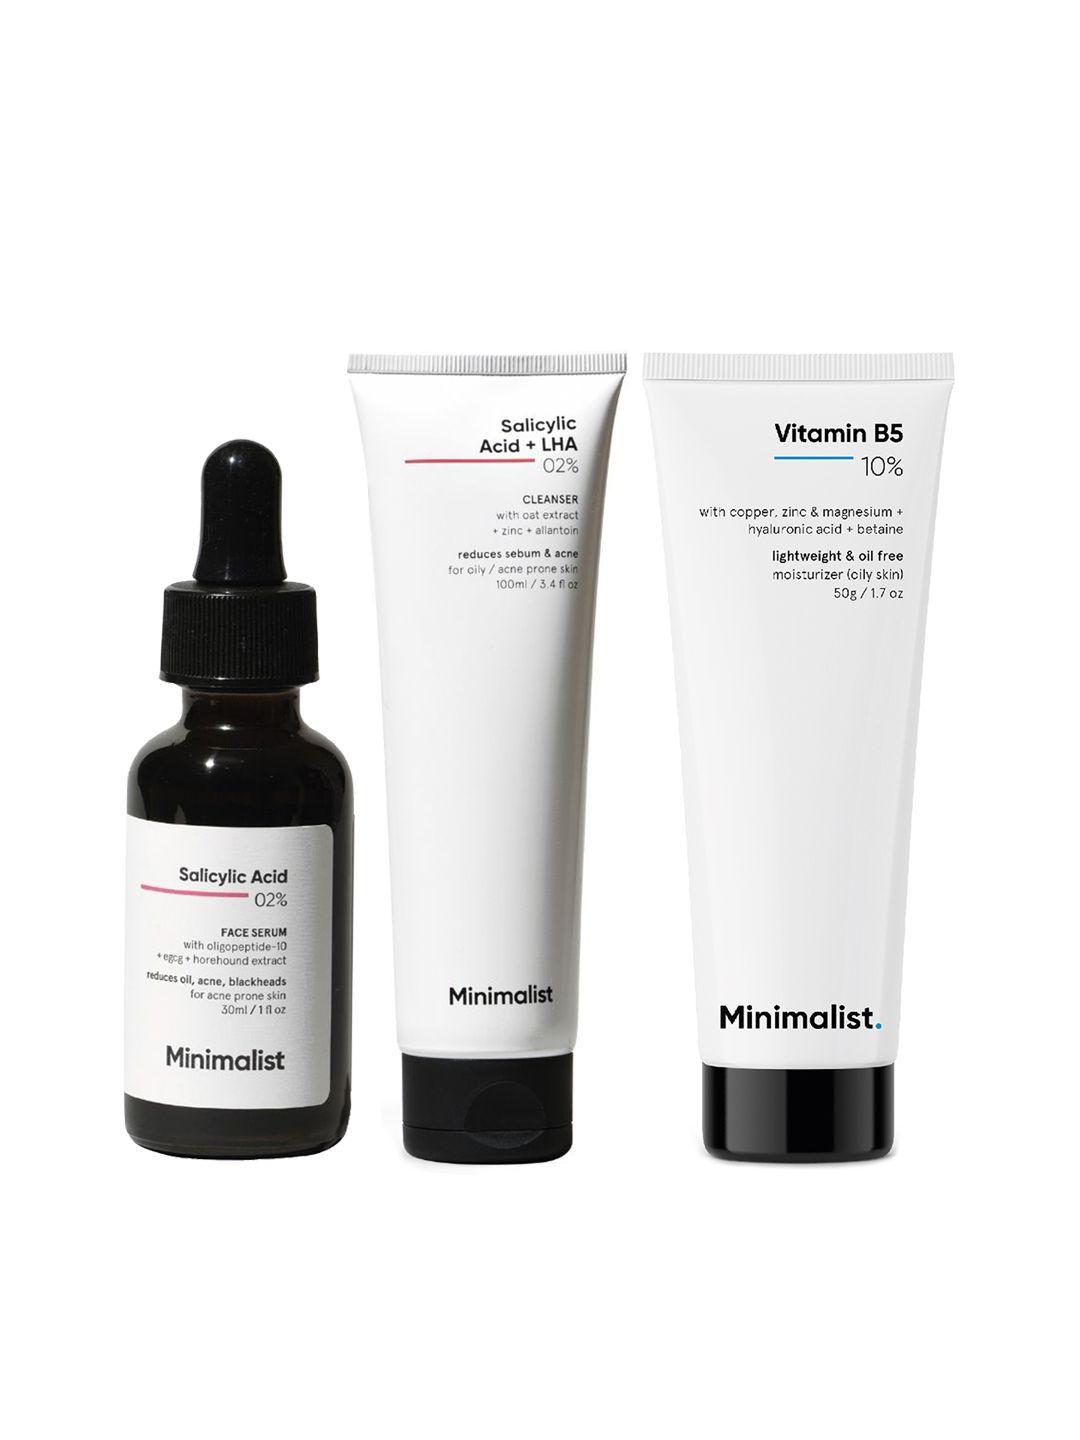 minimalist anti acne solution-face serum 30 ml + moisturizer 50g + face wash 100 ml